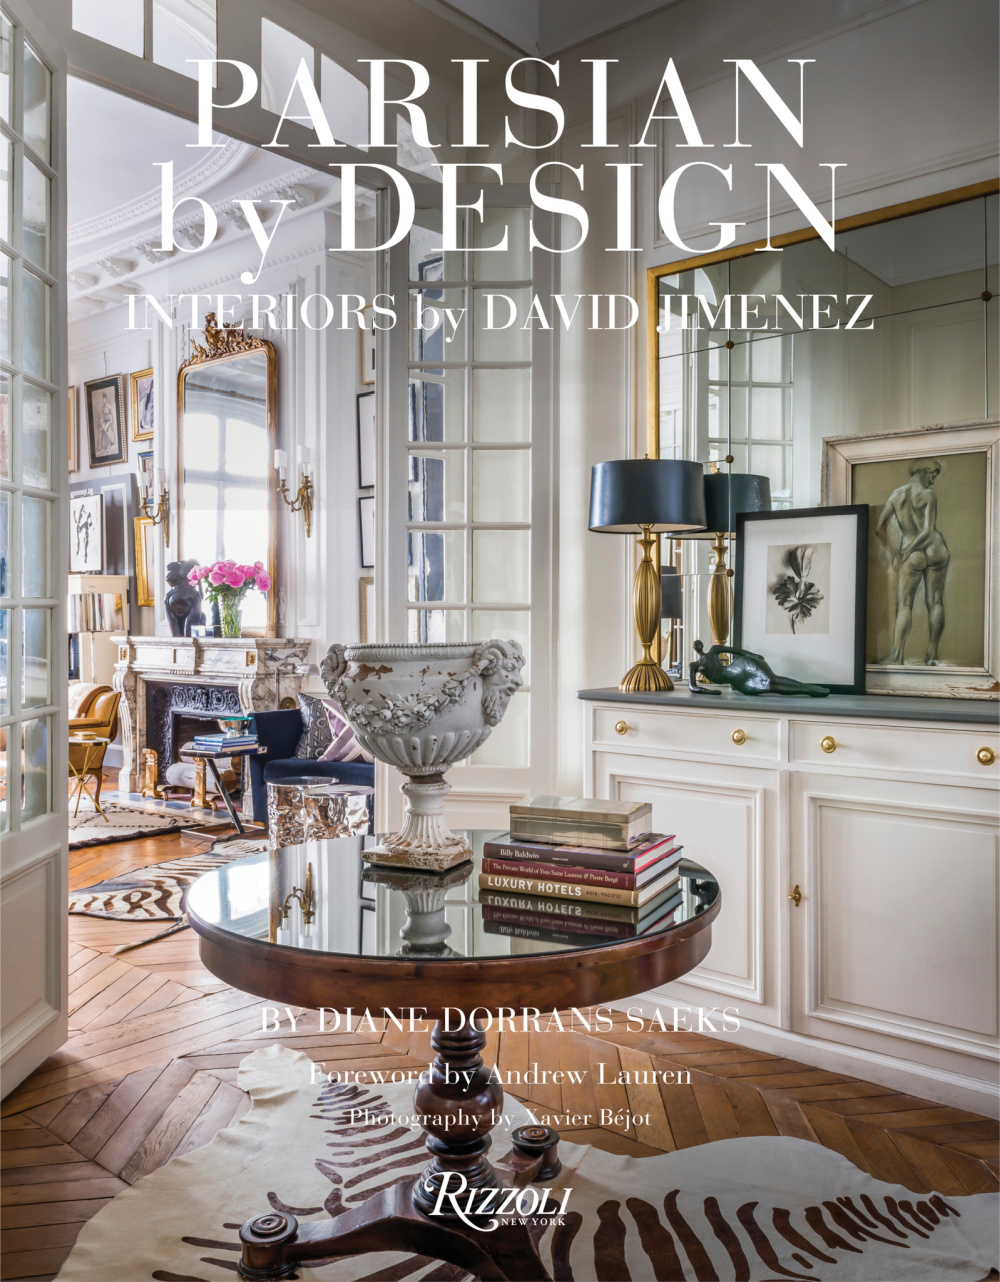 PARISIAN BY DESIGN by David Jimenez (Rizzoli, 2022) - book cover